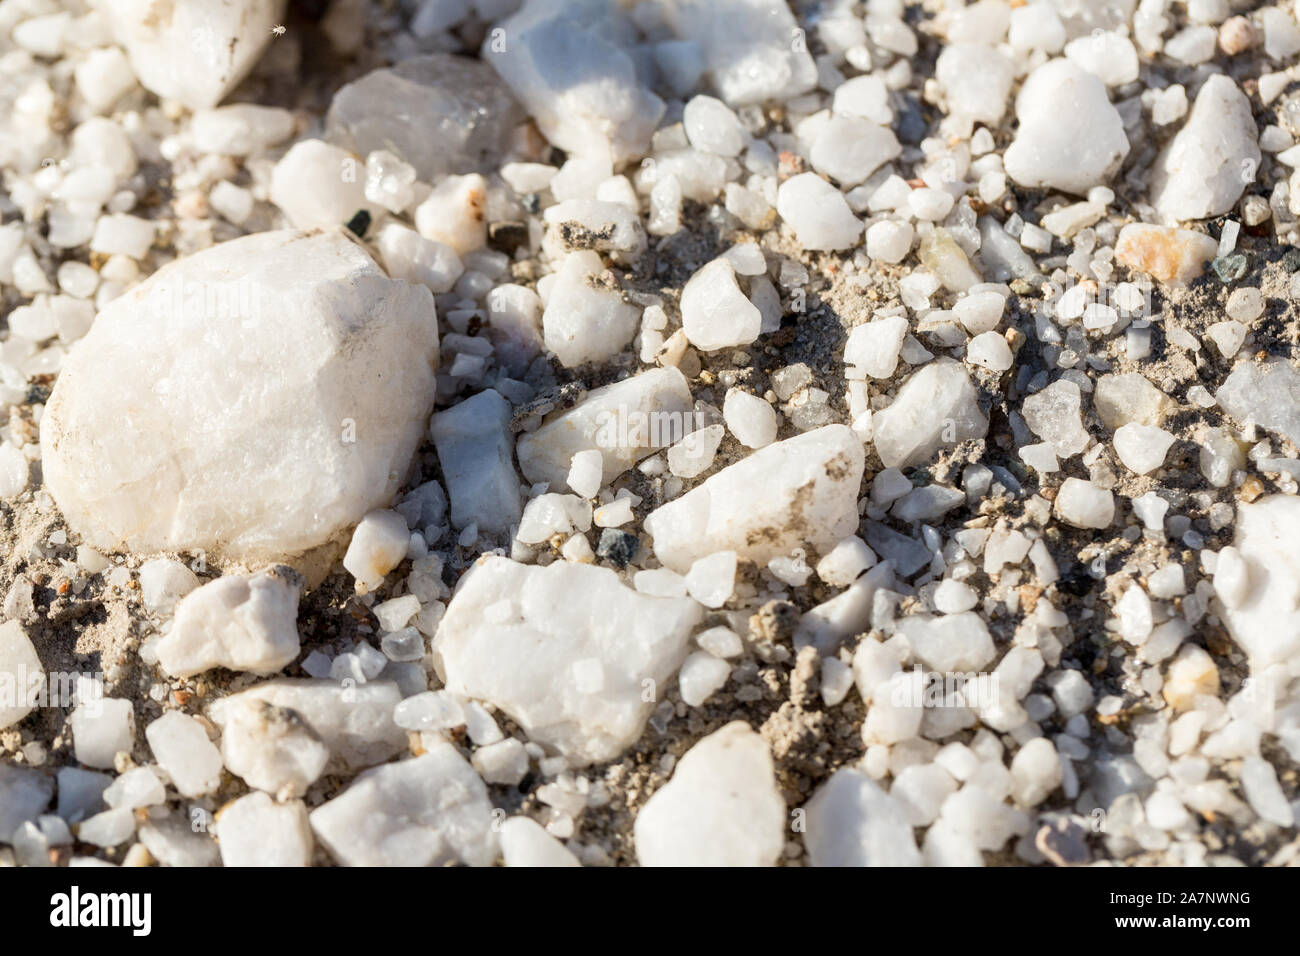 https://c8.alamy.com/comp/2A7NWNG/quartz-white-rocks-big-and-small-background-in-nevada-desert-2A7NWNG.jpg